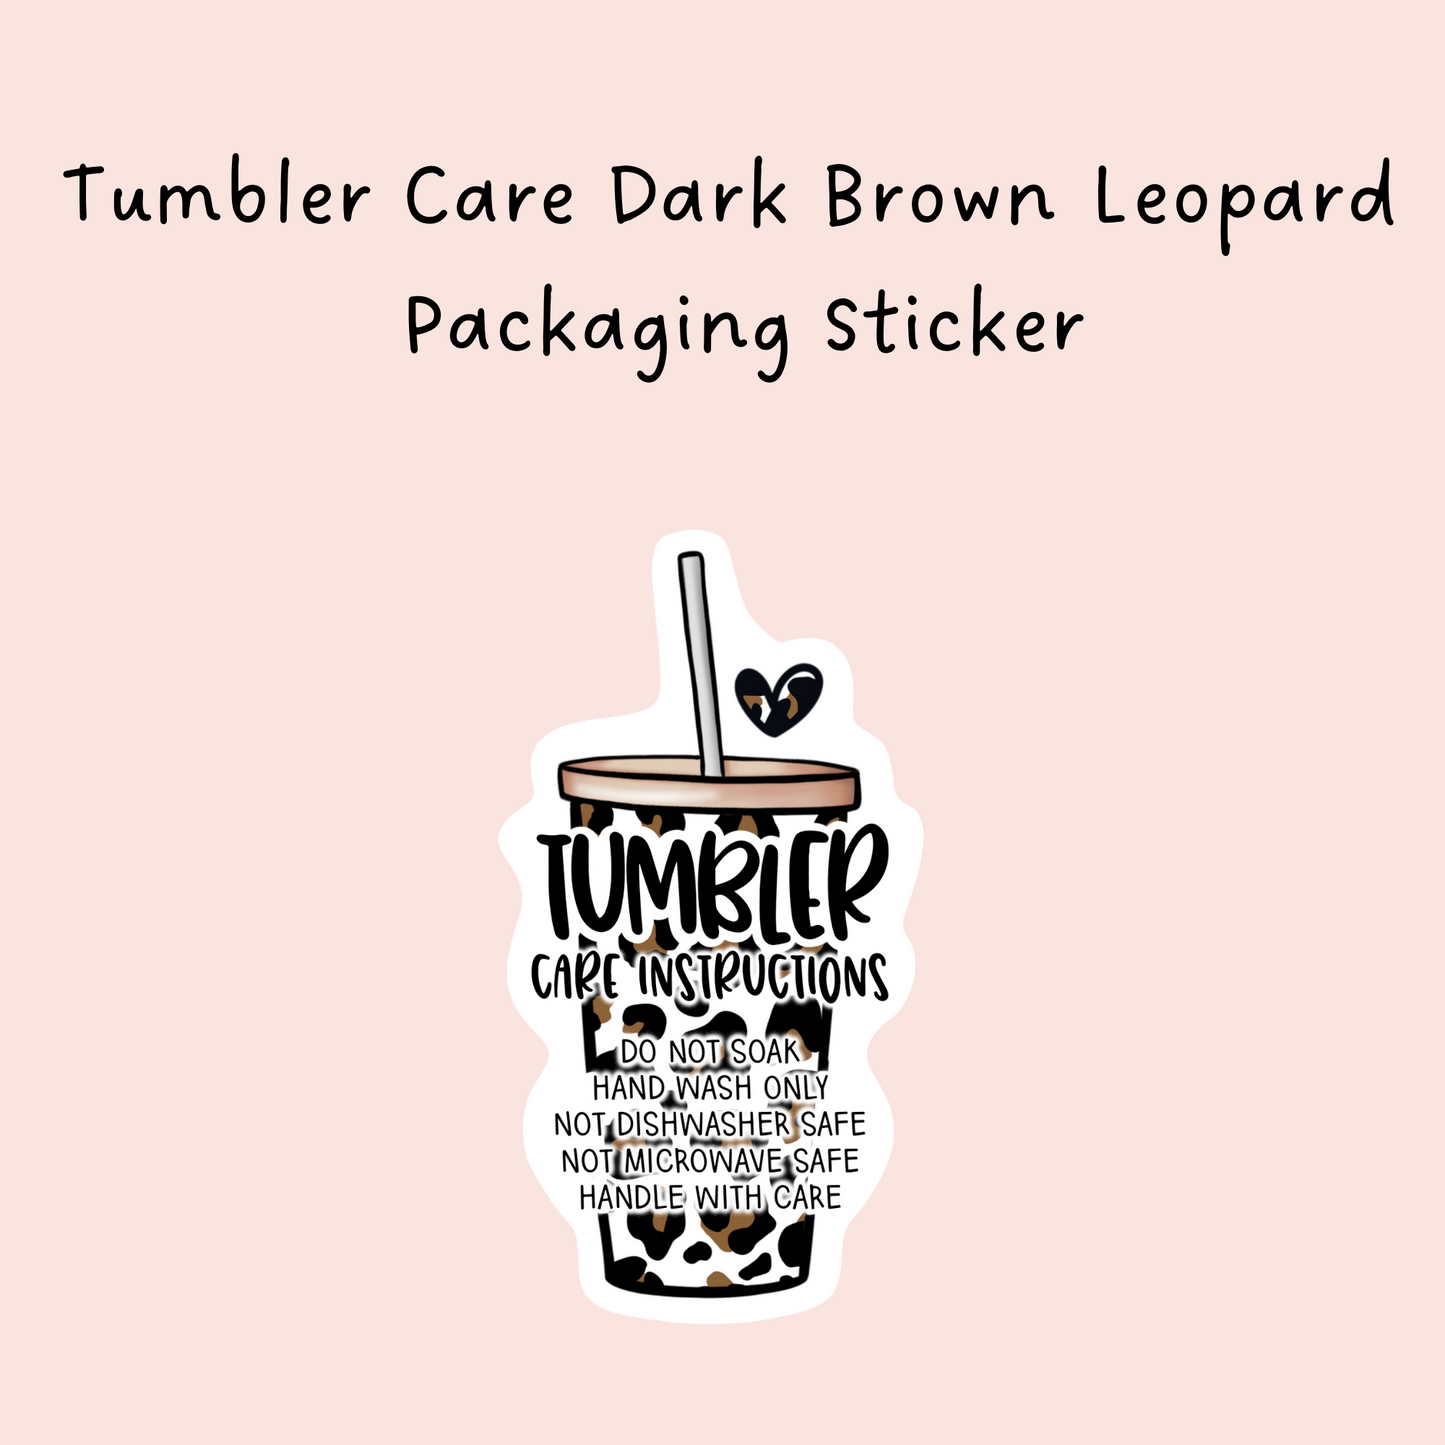 Tumbler Care Dark Brown Leopard Packaging Sticker